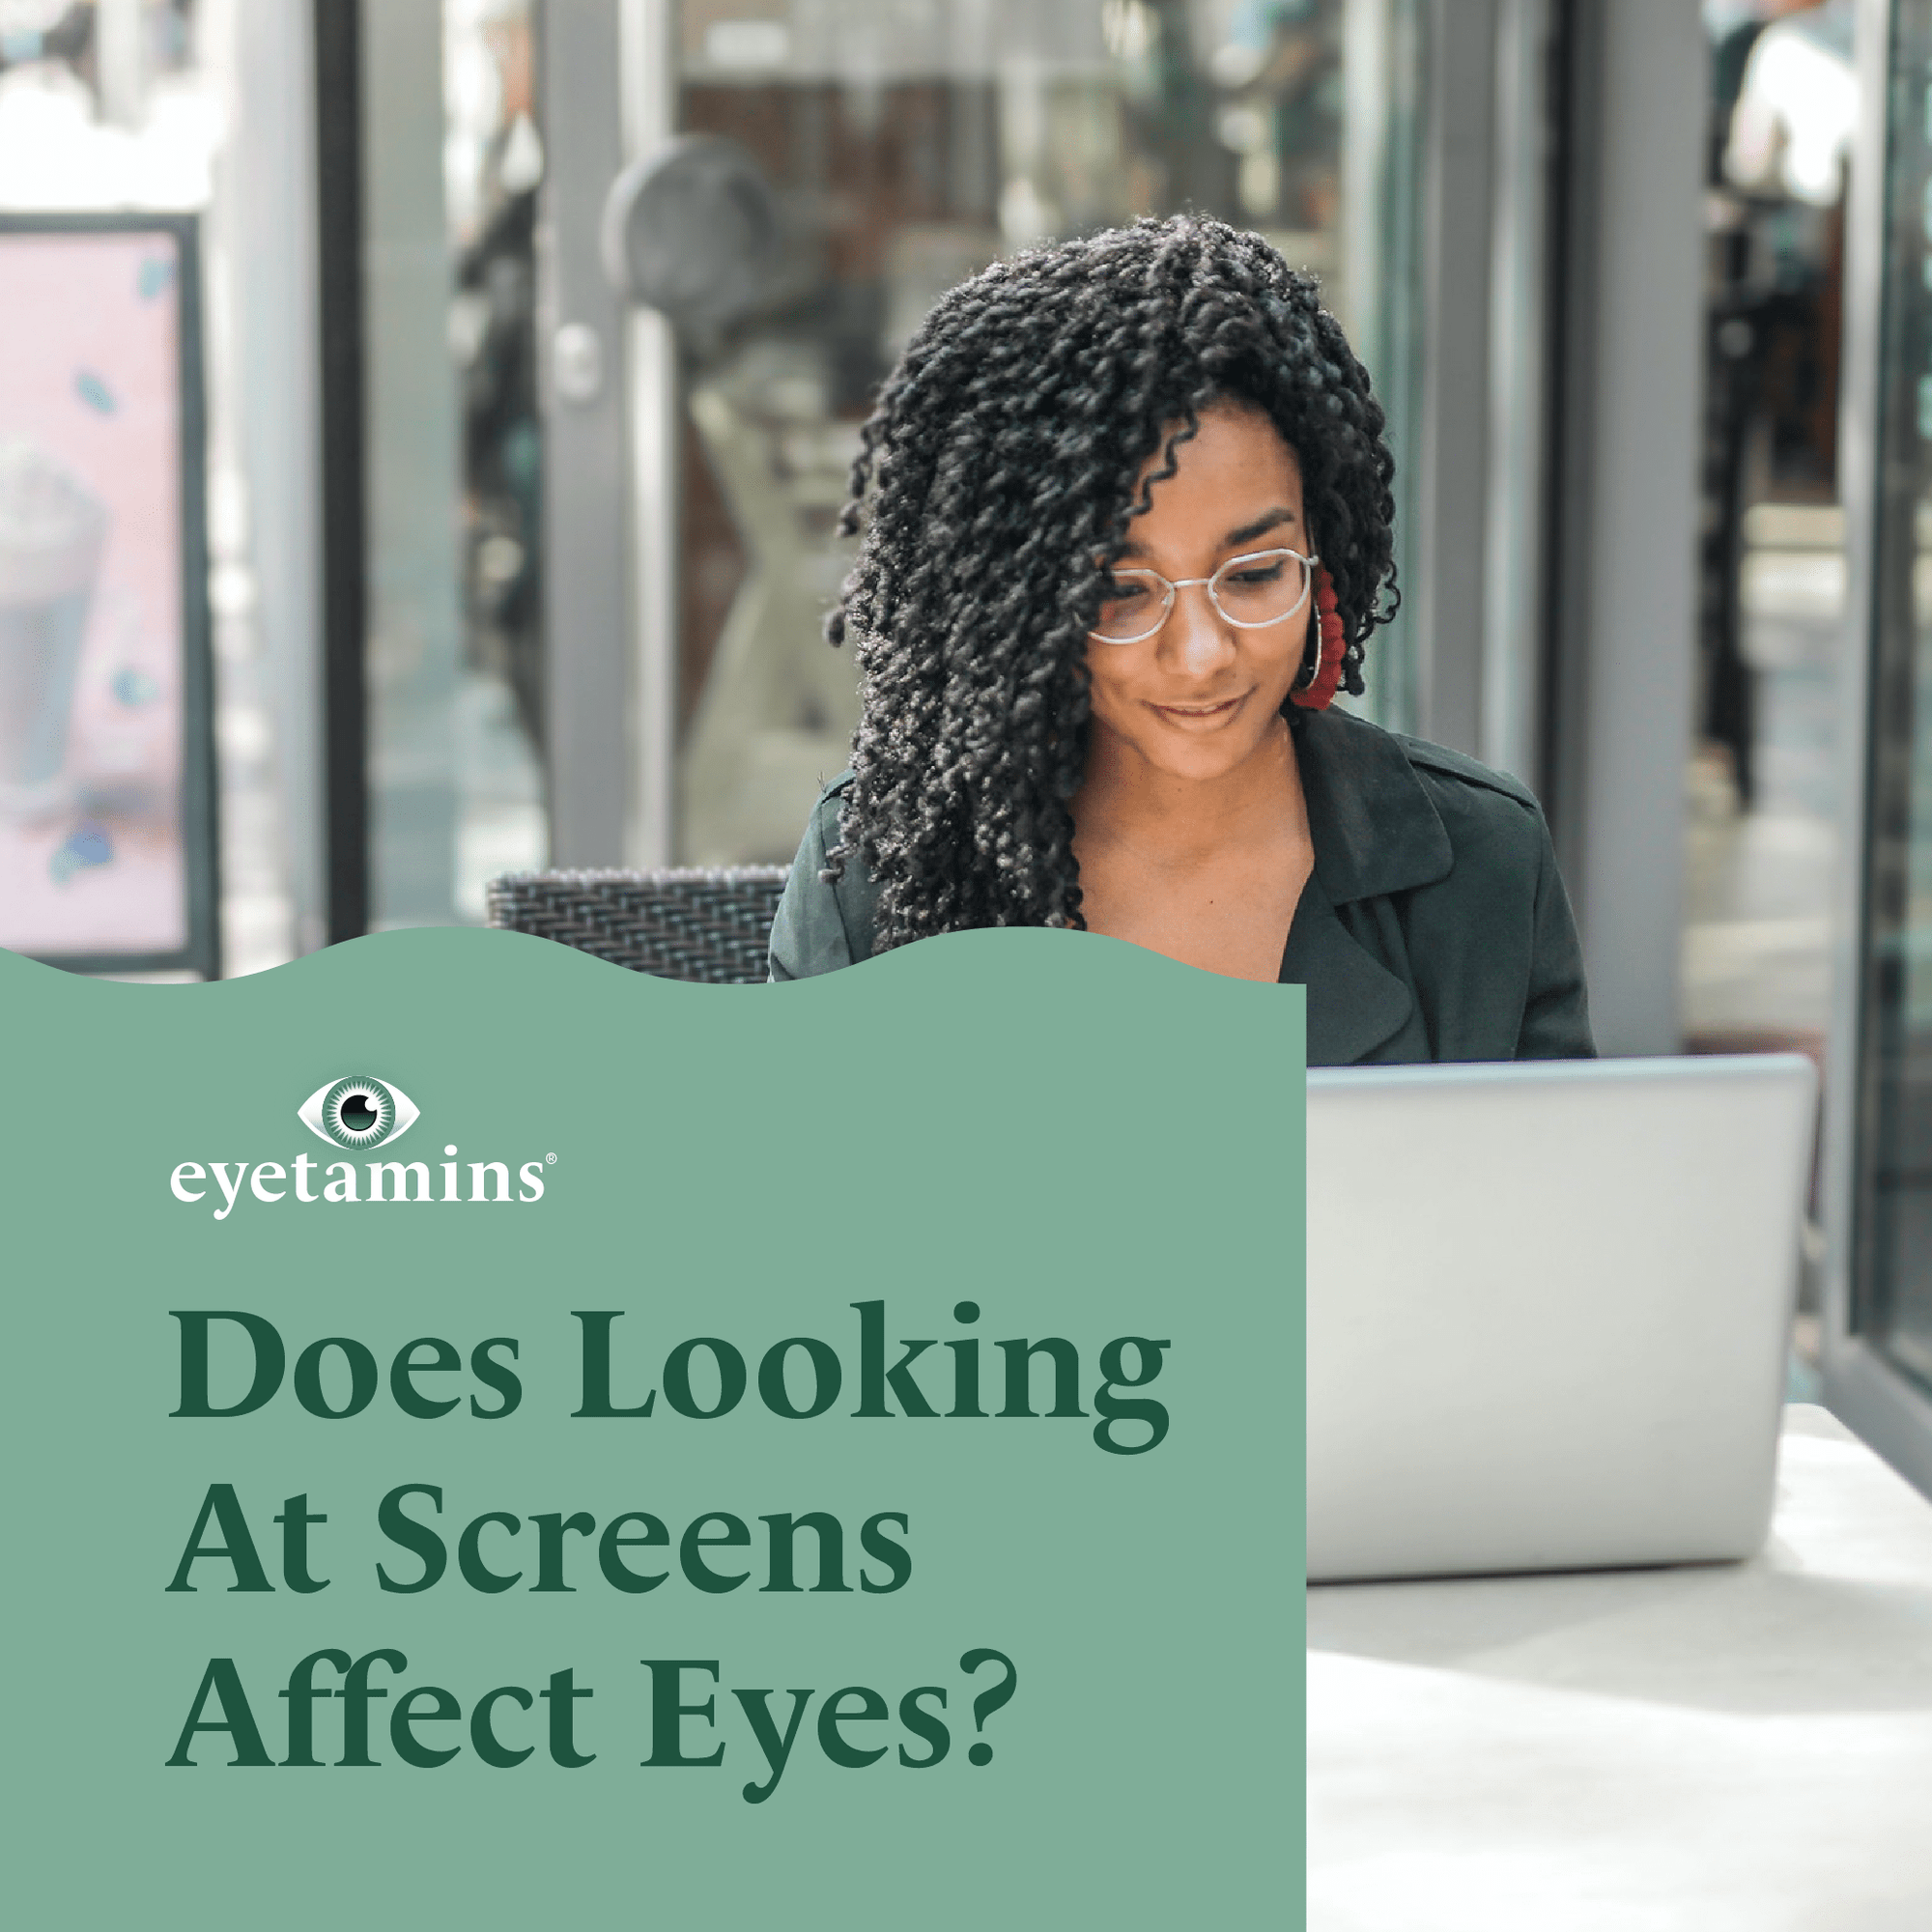 Eyetamins - Does Looking At Screens Affect Eyes?